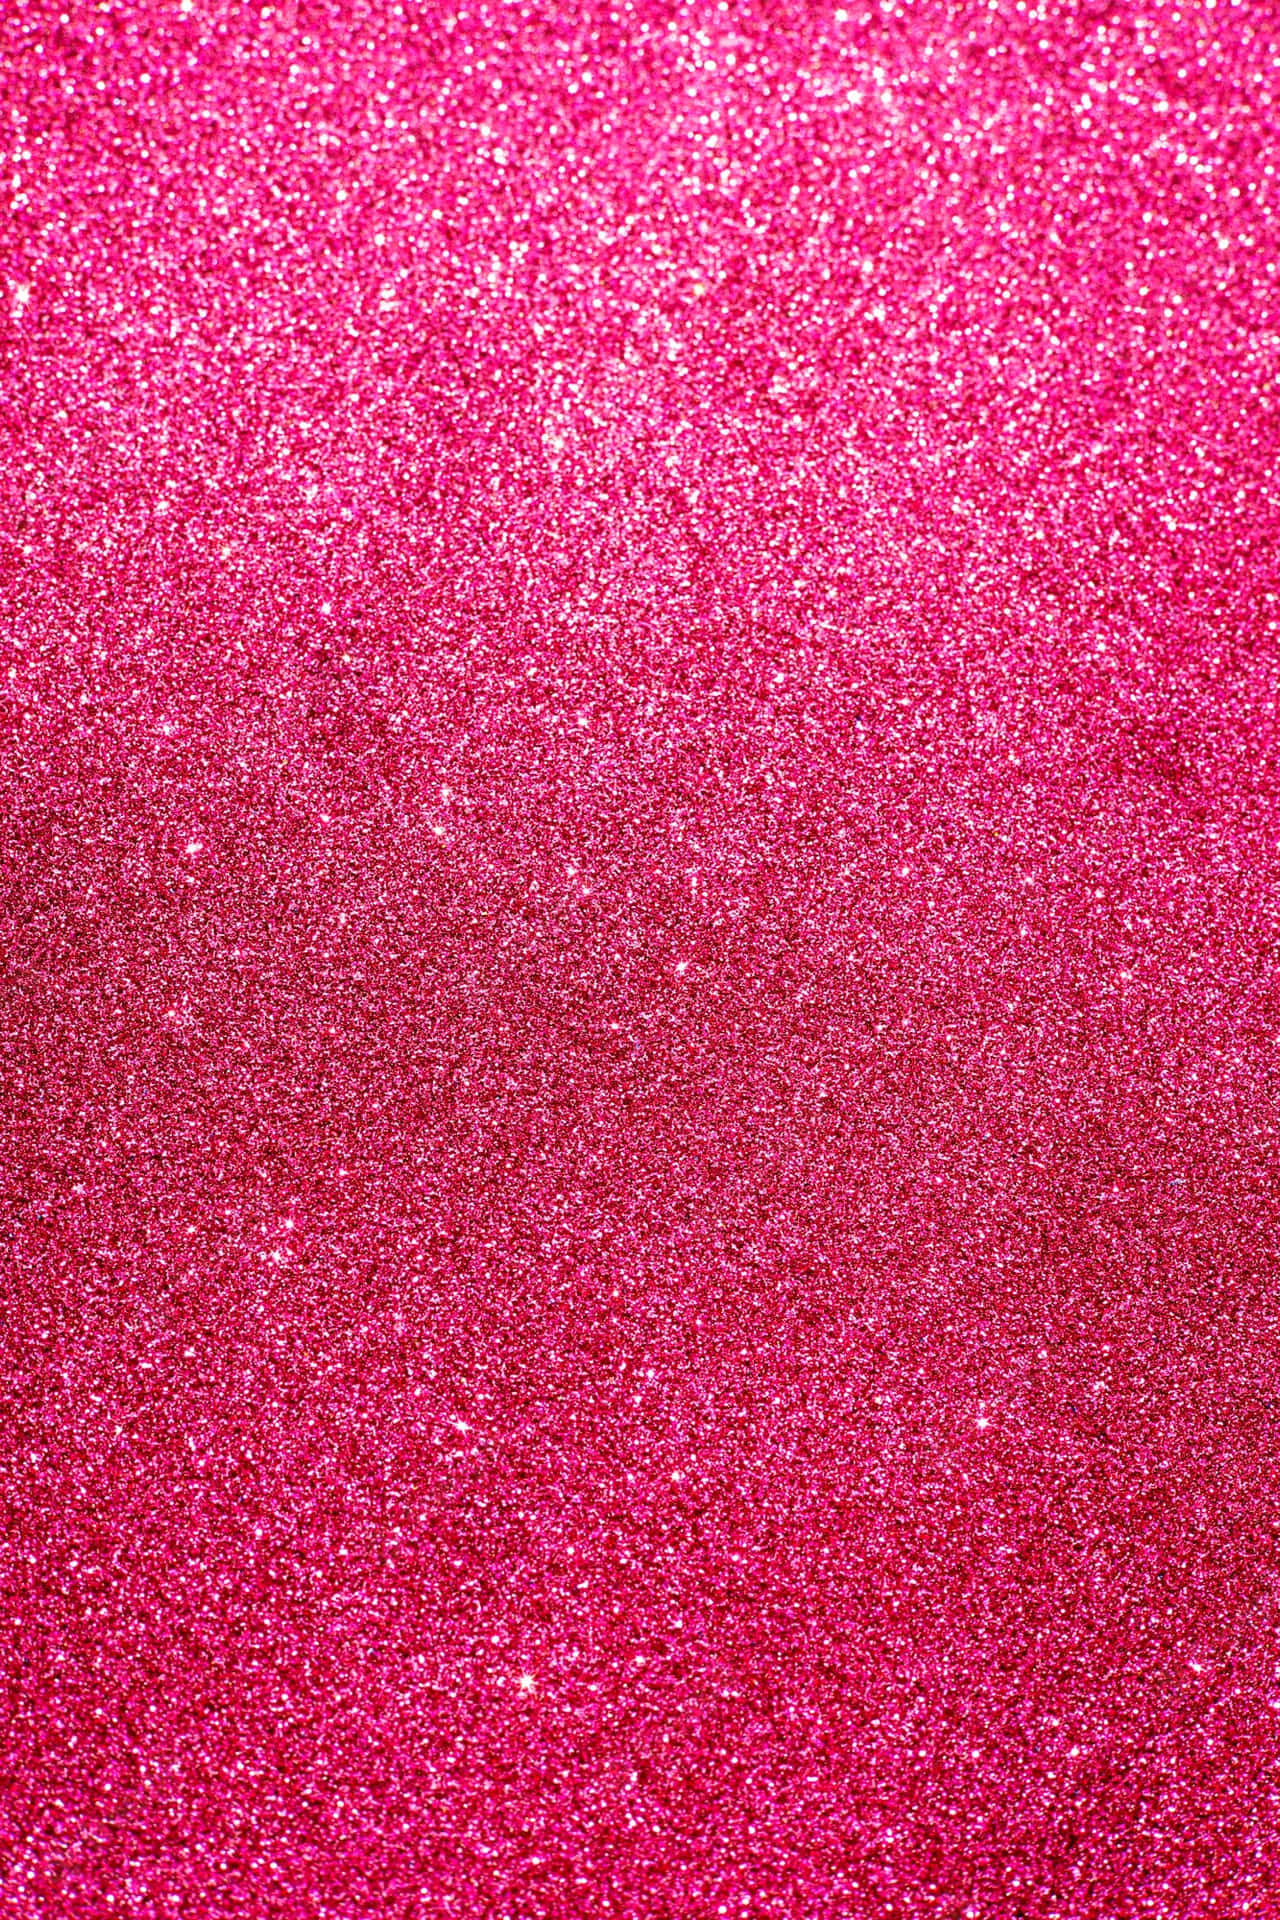 Bright, Hot Pink Glitter Background